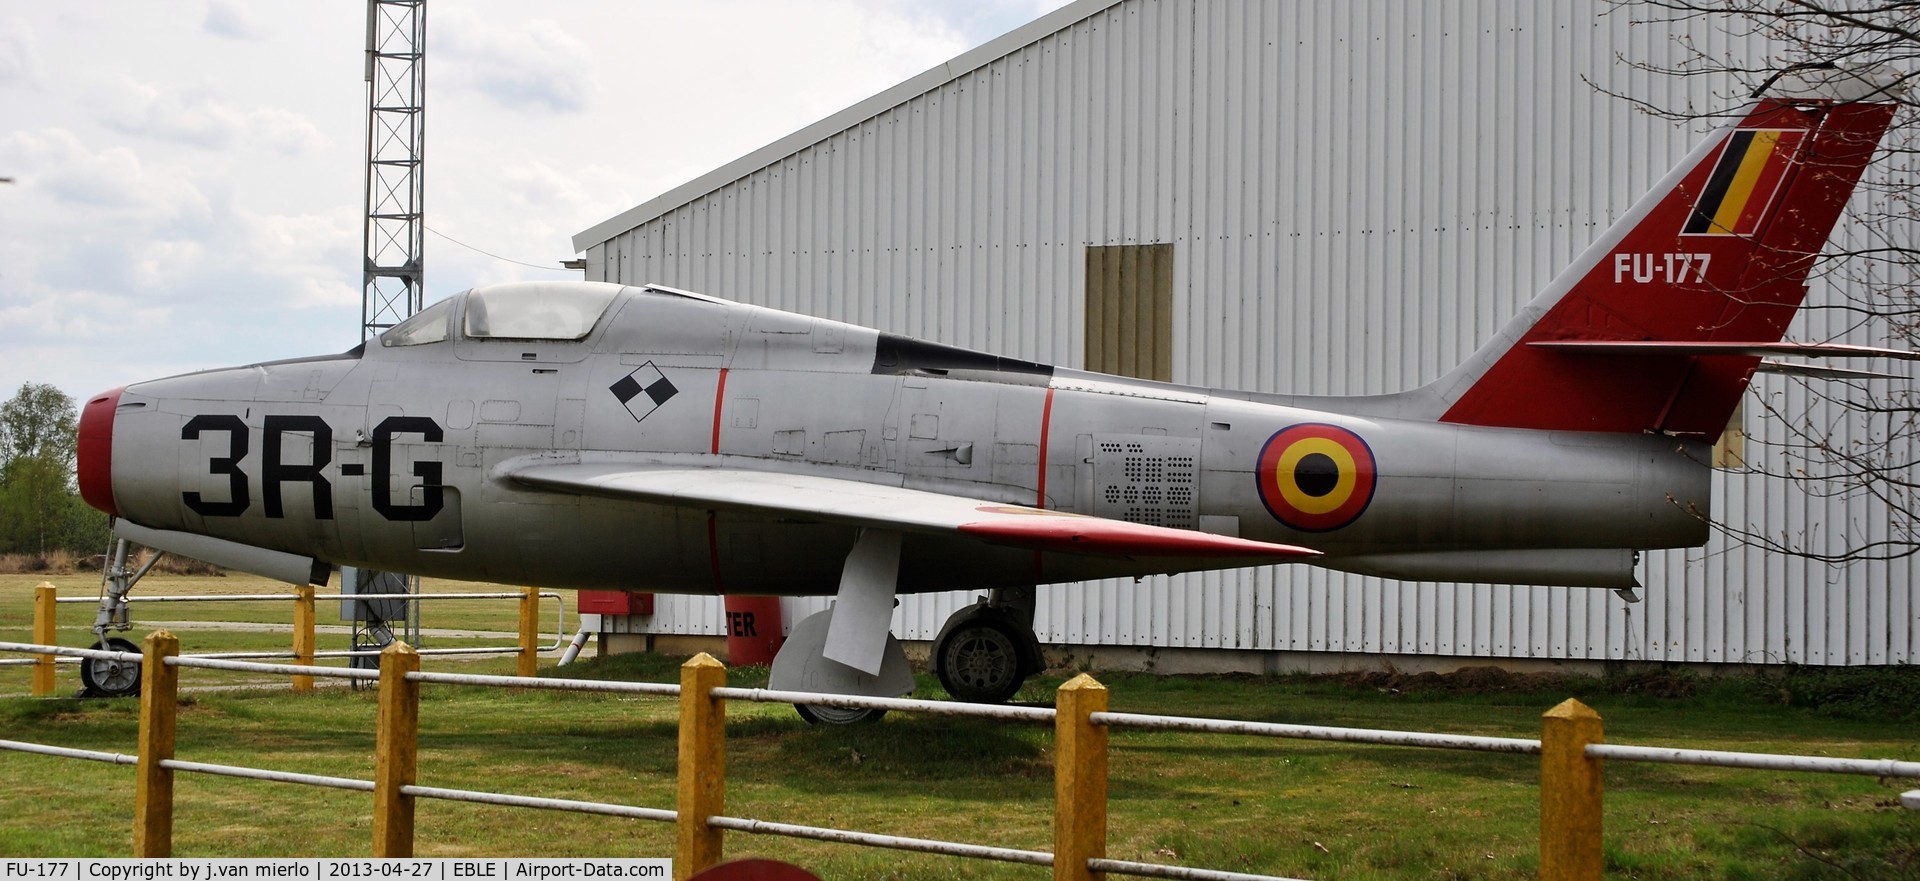 FU-177, 1952 Republic F-84F Thunderstreak C/N Not found (53-6888), Leopoldsburg